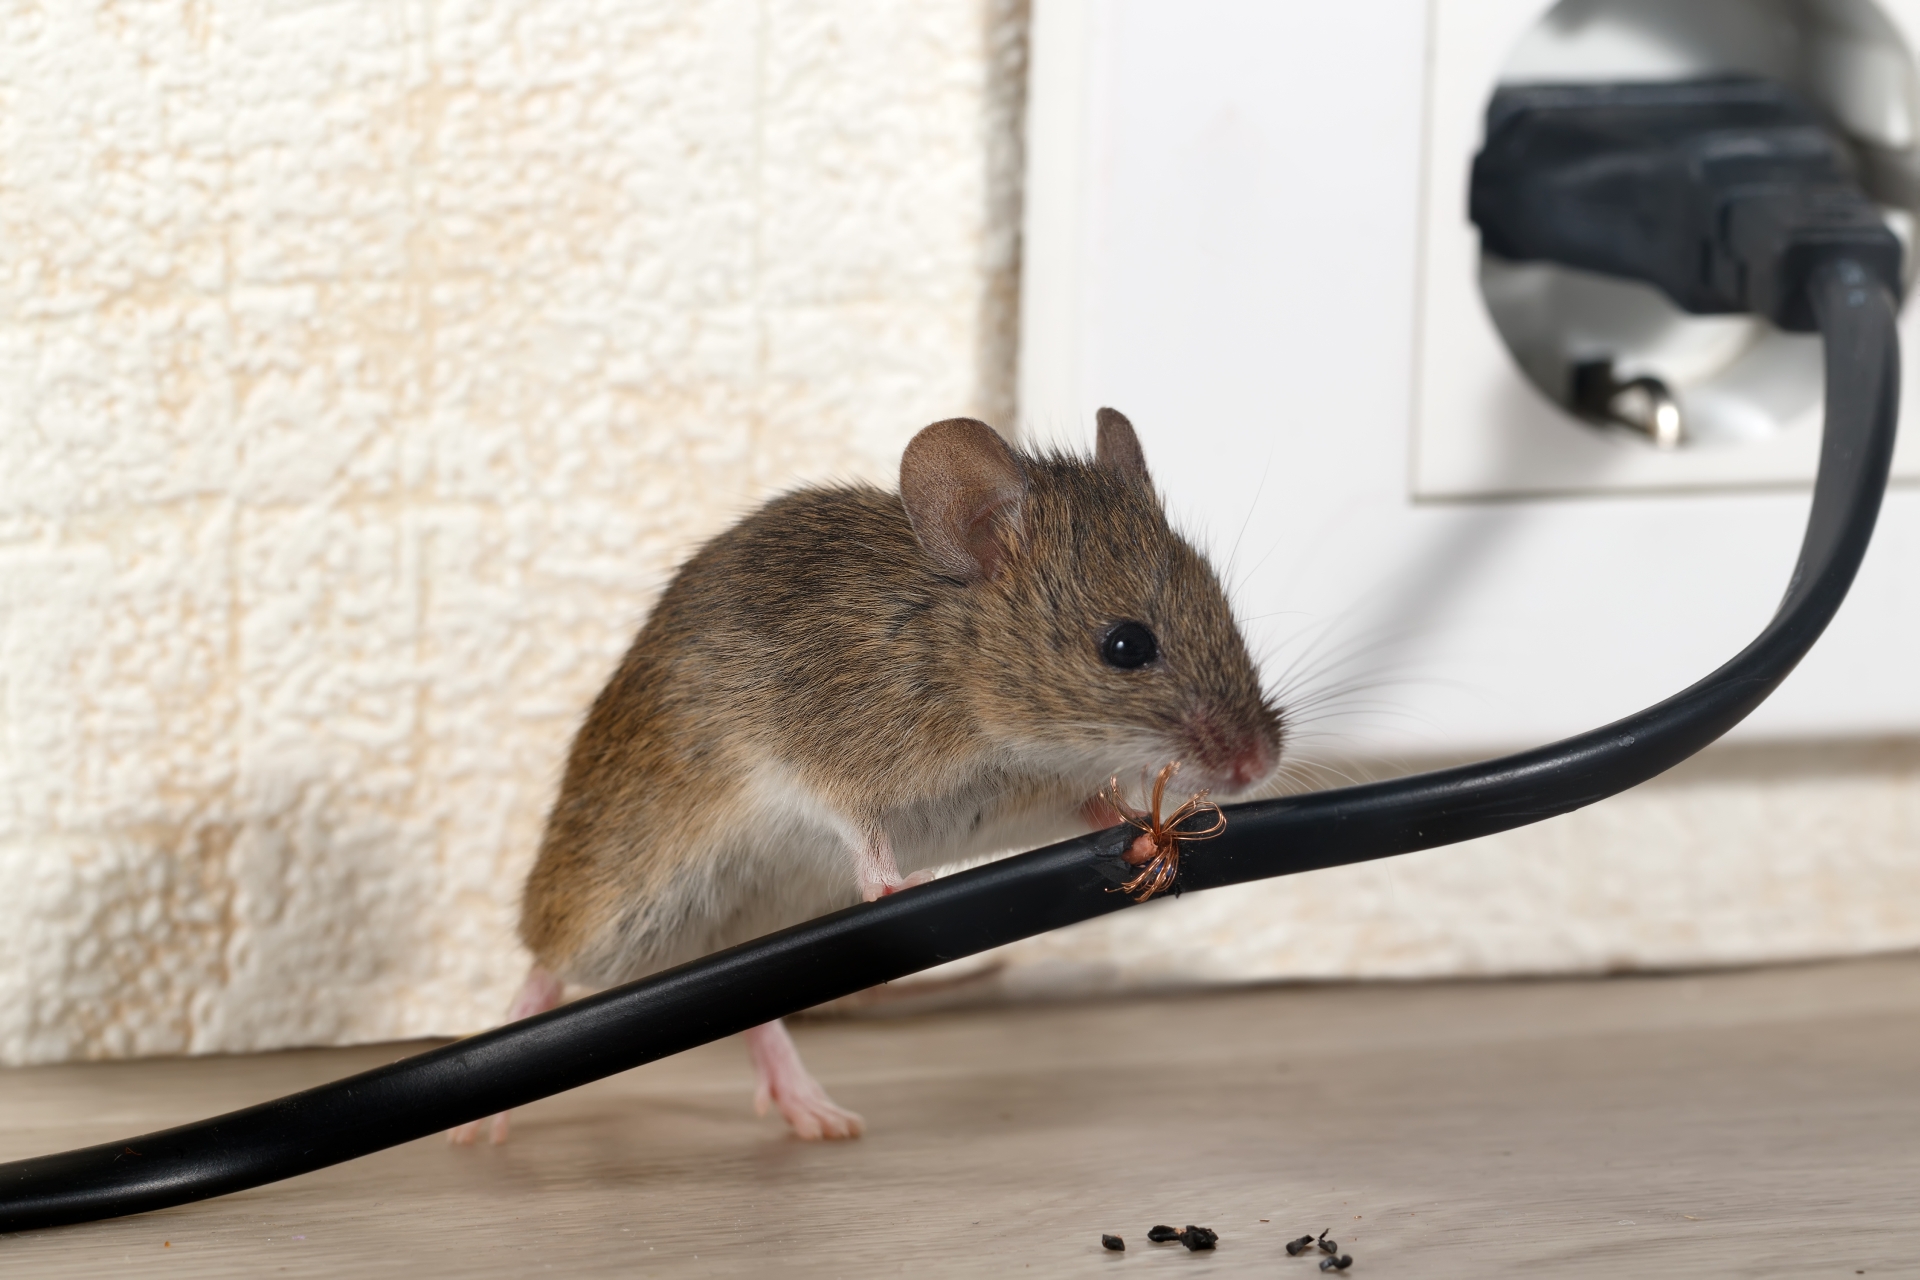 Mice Infestation, Pest Control in Chertsey, Ottershaw, Longcross, KT16. Call Now 020 8166 9746